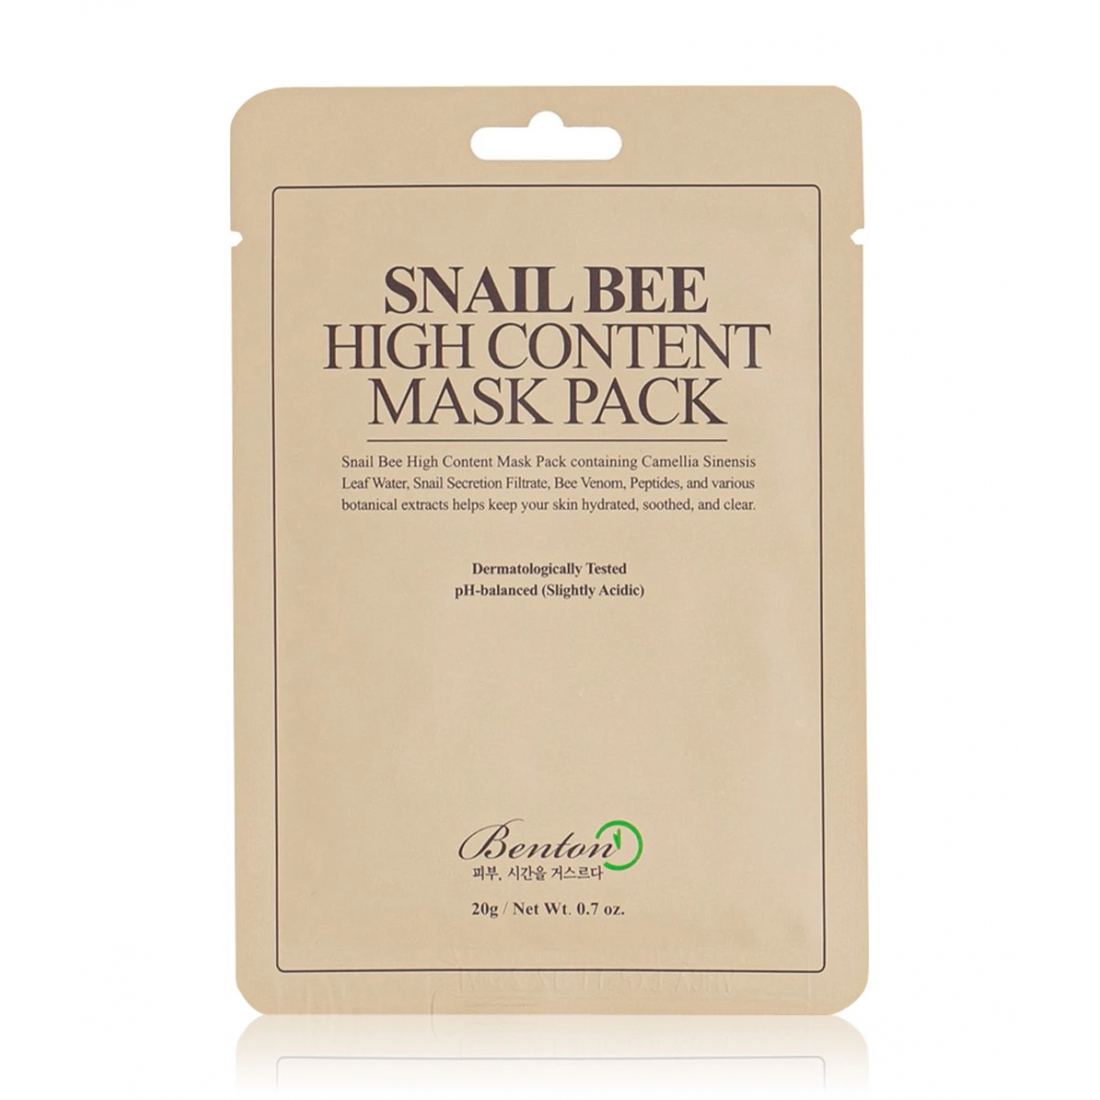 Masque visage 'Snail Bee High Content' - 20 ml